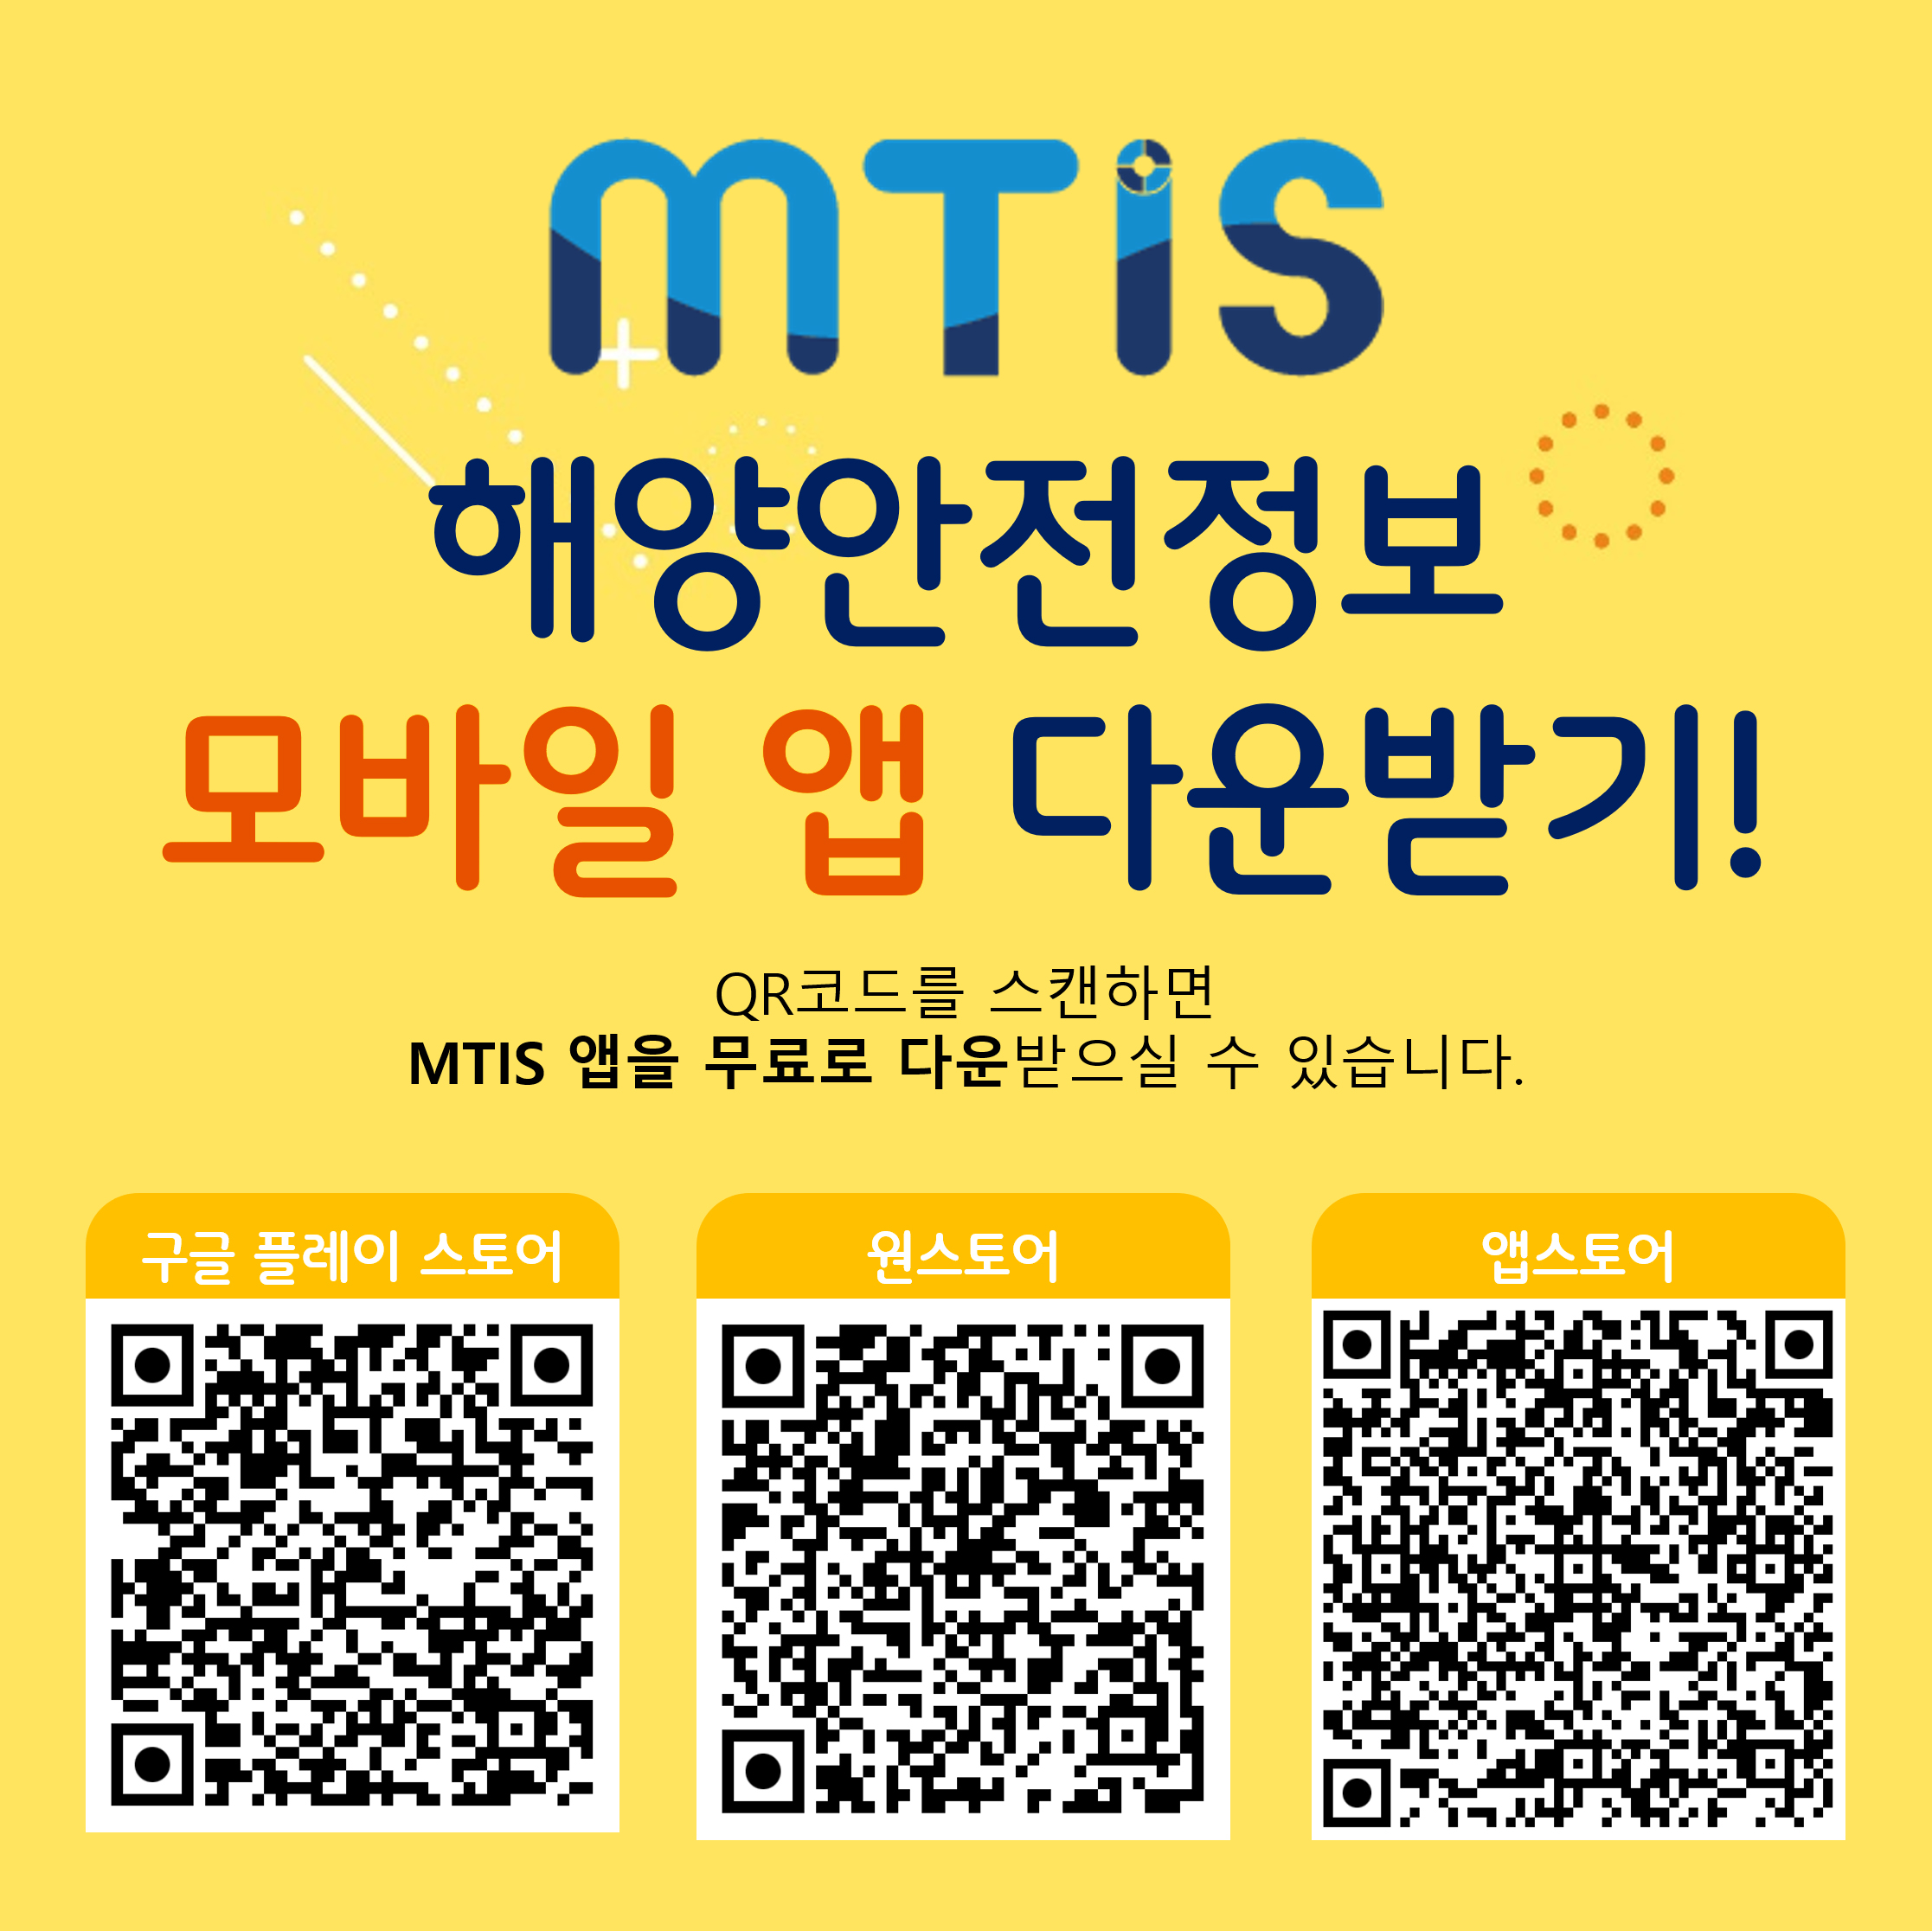 MTIS 해양안전정보 모바일 앱 다운받기!
QR코드를 스캔하면 MTIS 앱을 무료로 다운 받으실수 있습니다.
구글 플레이 스토어 : https://play.google.com/store/apps/details;jsessionid=0F01C4437A26ABD0952CF3302D7940FC?id=kr.or.komsa.mtis
원스토어 : https://m.onestore.co.kr/mobilepoc/apps/appsDetail.omp?prodId=0000771271
앱스토어 : https://apps.apple.com/kr/app/%ED%95%B4%EC%96%91%EA%B5%90%ED%86%B5%EC%95%88%EC%A0%84%EC%A0%95%EB%B3%B4/id6462842483